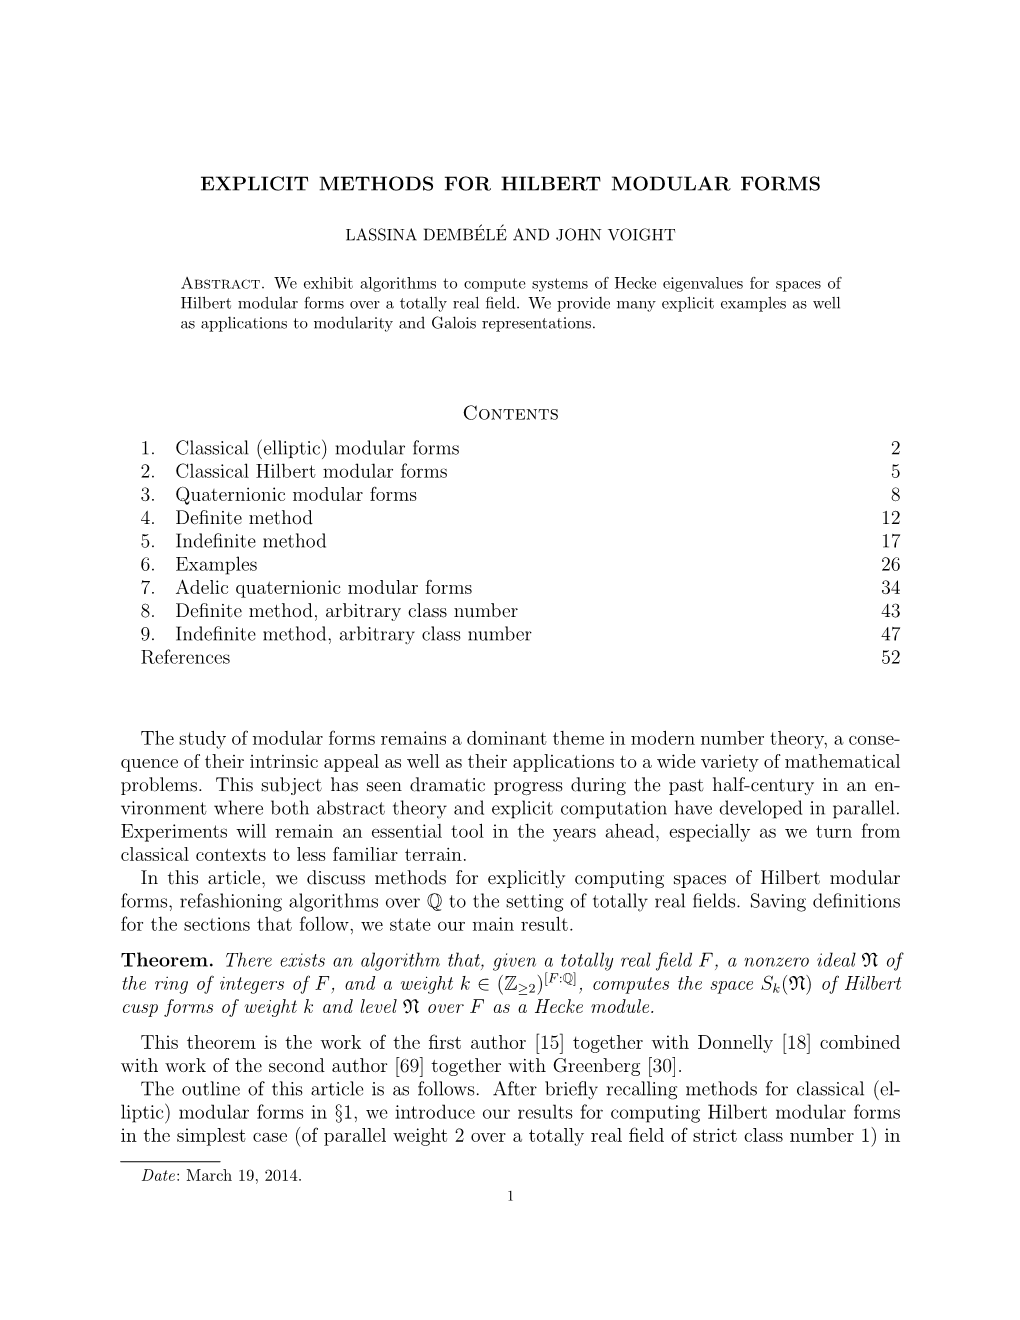 Explicit Methods for Hilbert Modular Forms